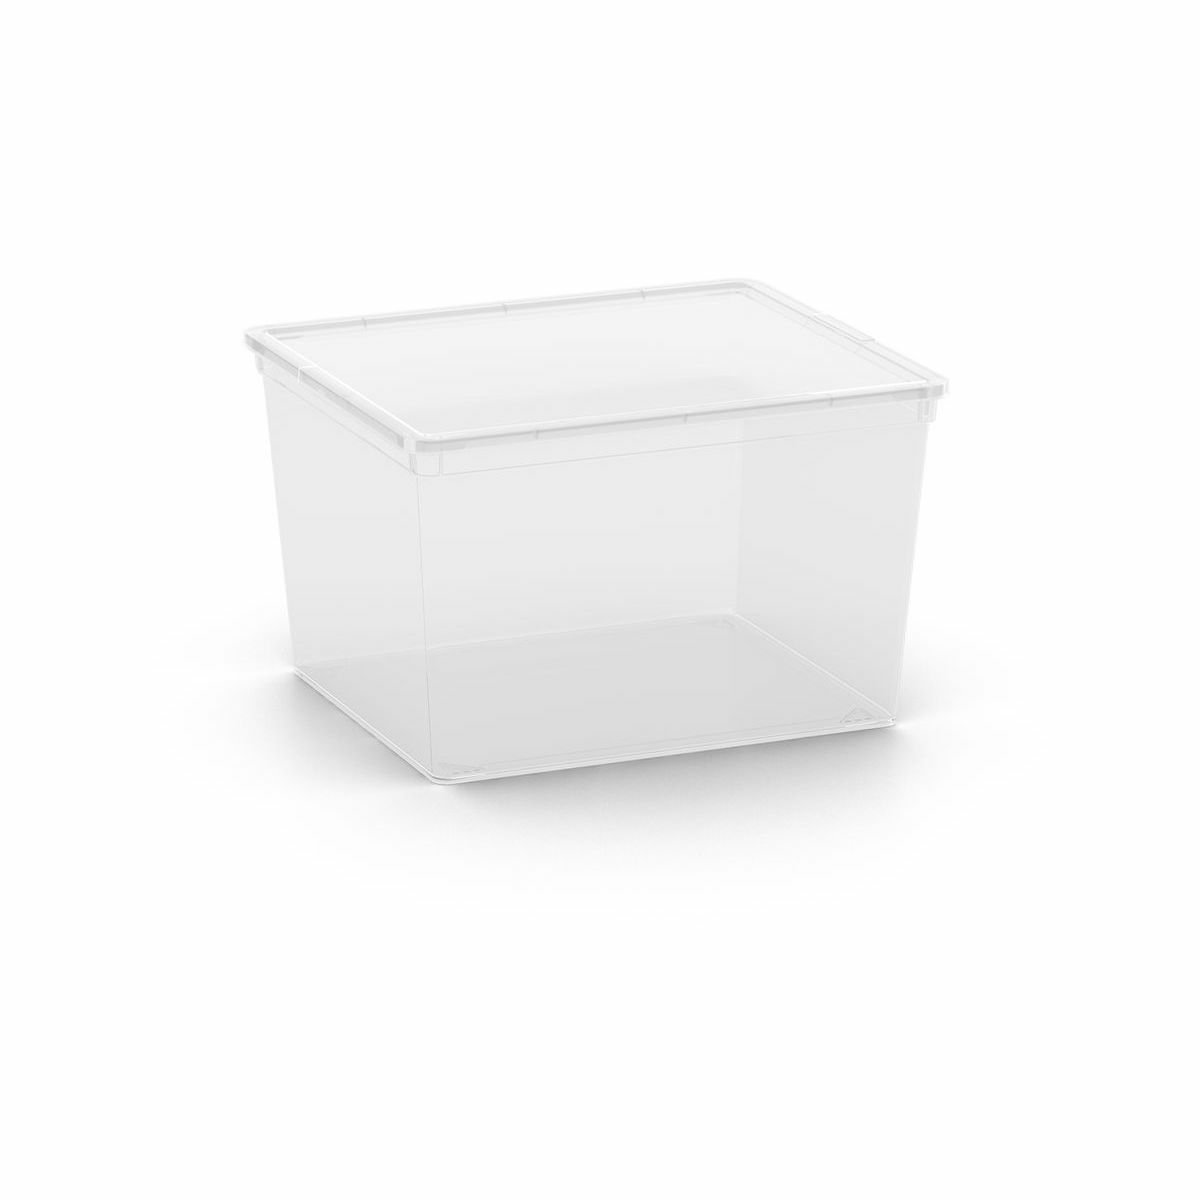 C Box CUBE - transparent 27l